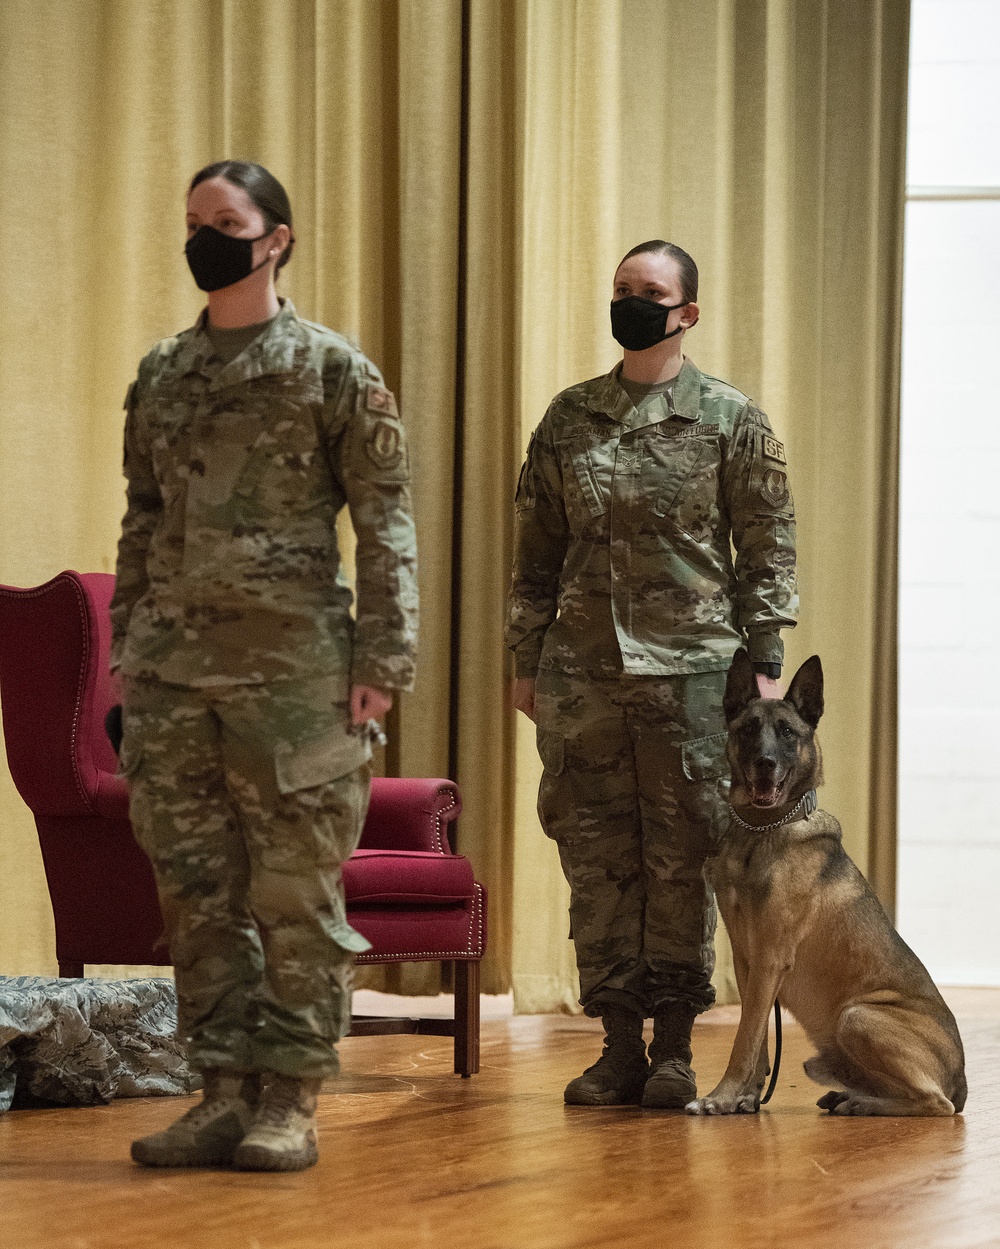 Military Working Dog Rudo Retires